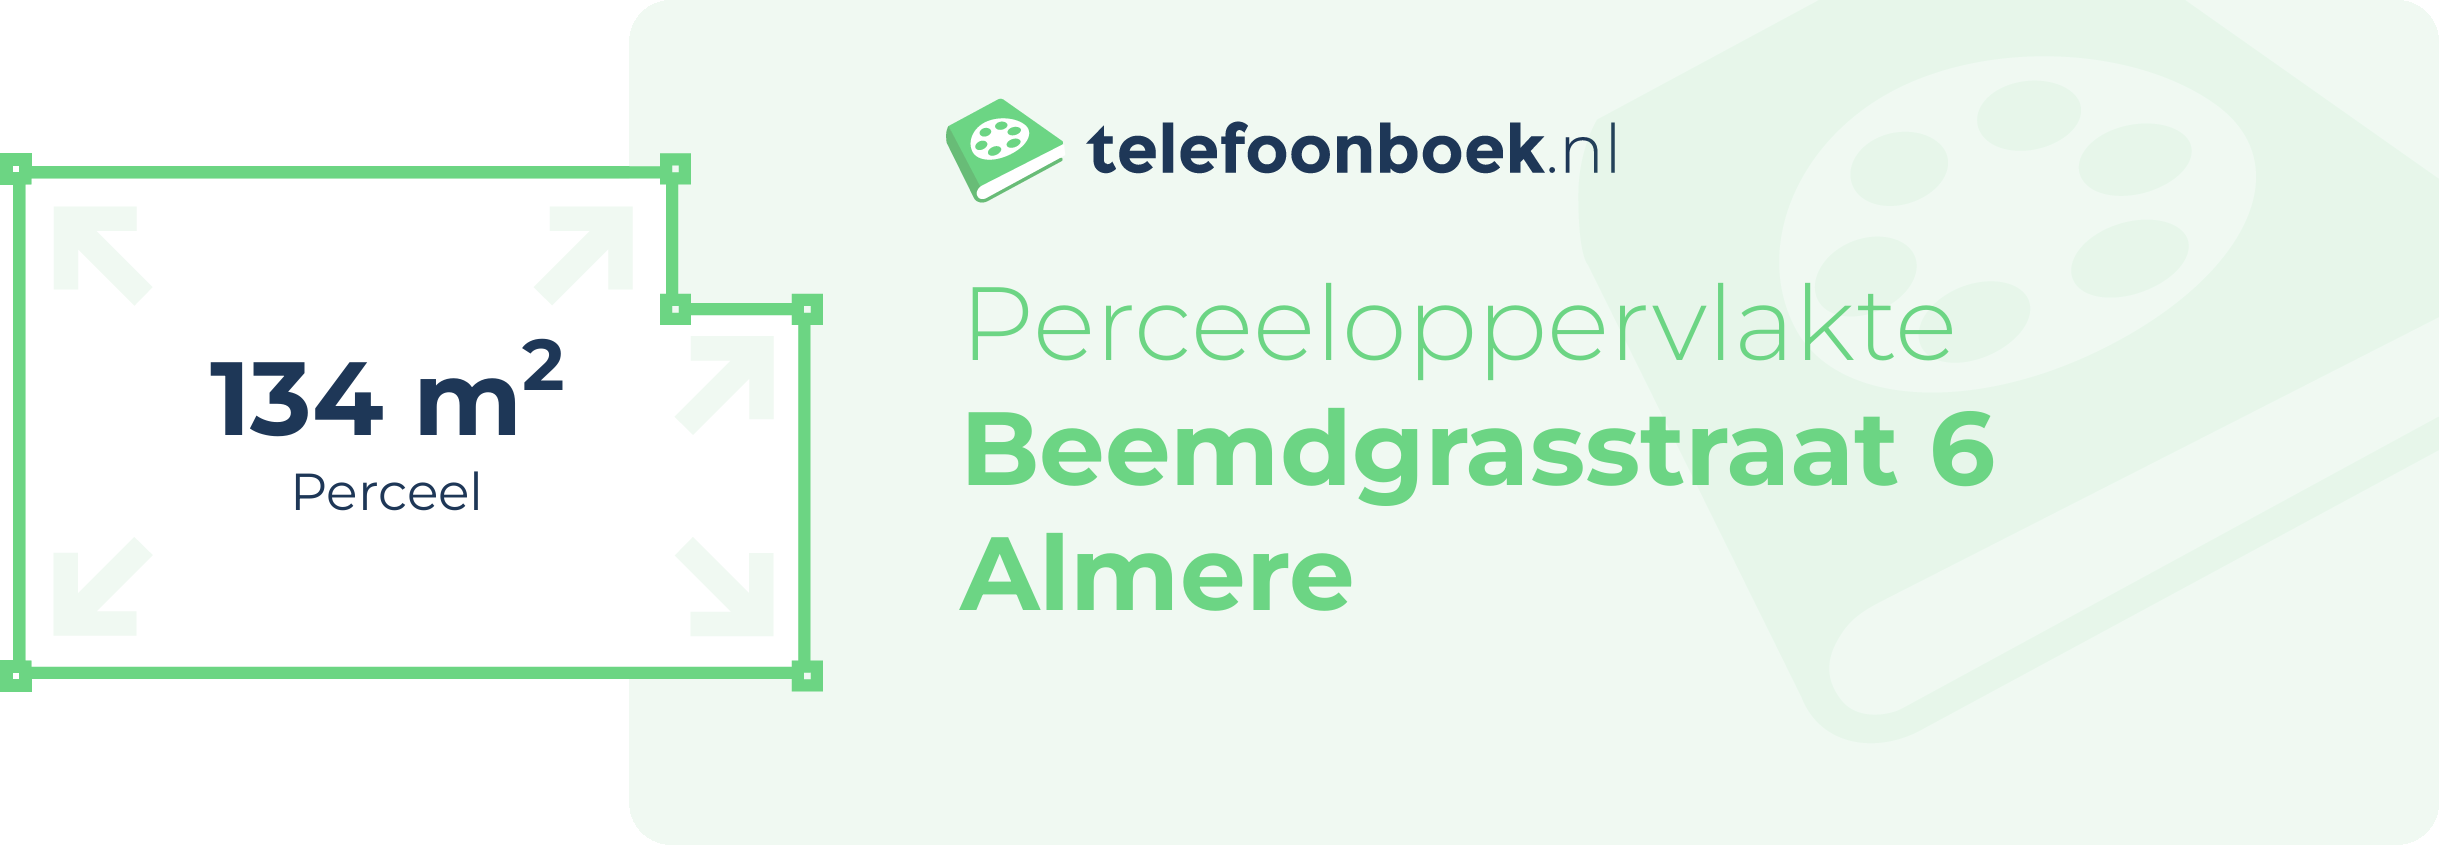 Perceeloppervlakte Beemdgrasstraat 6 Almere